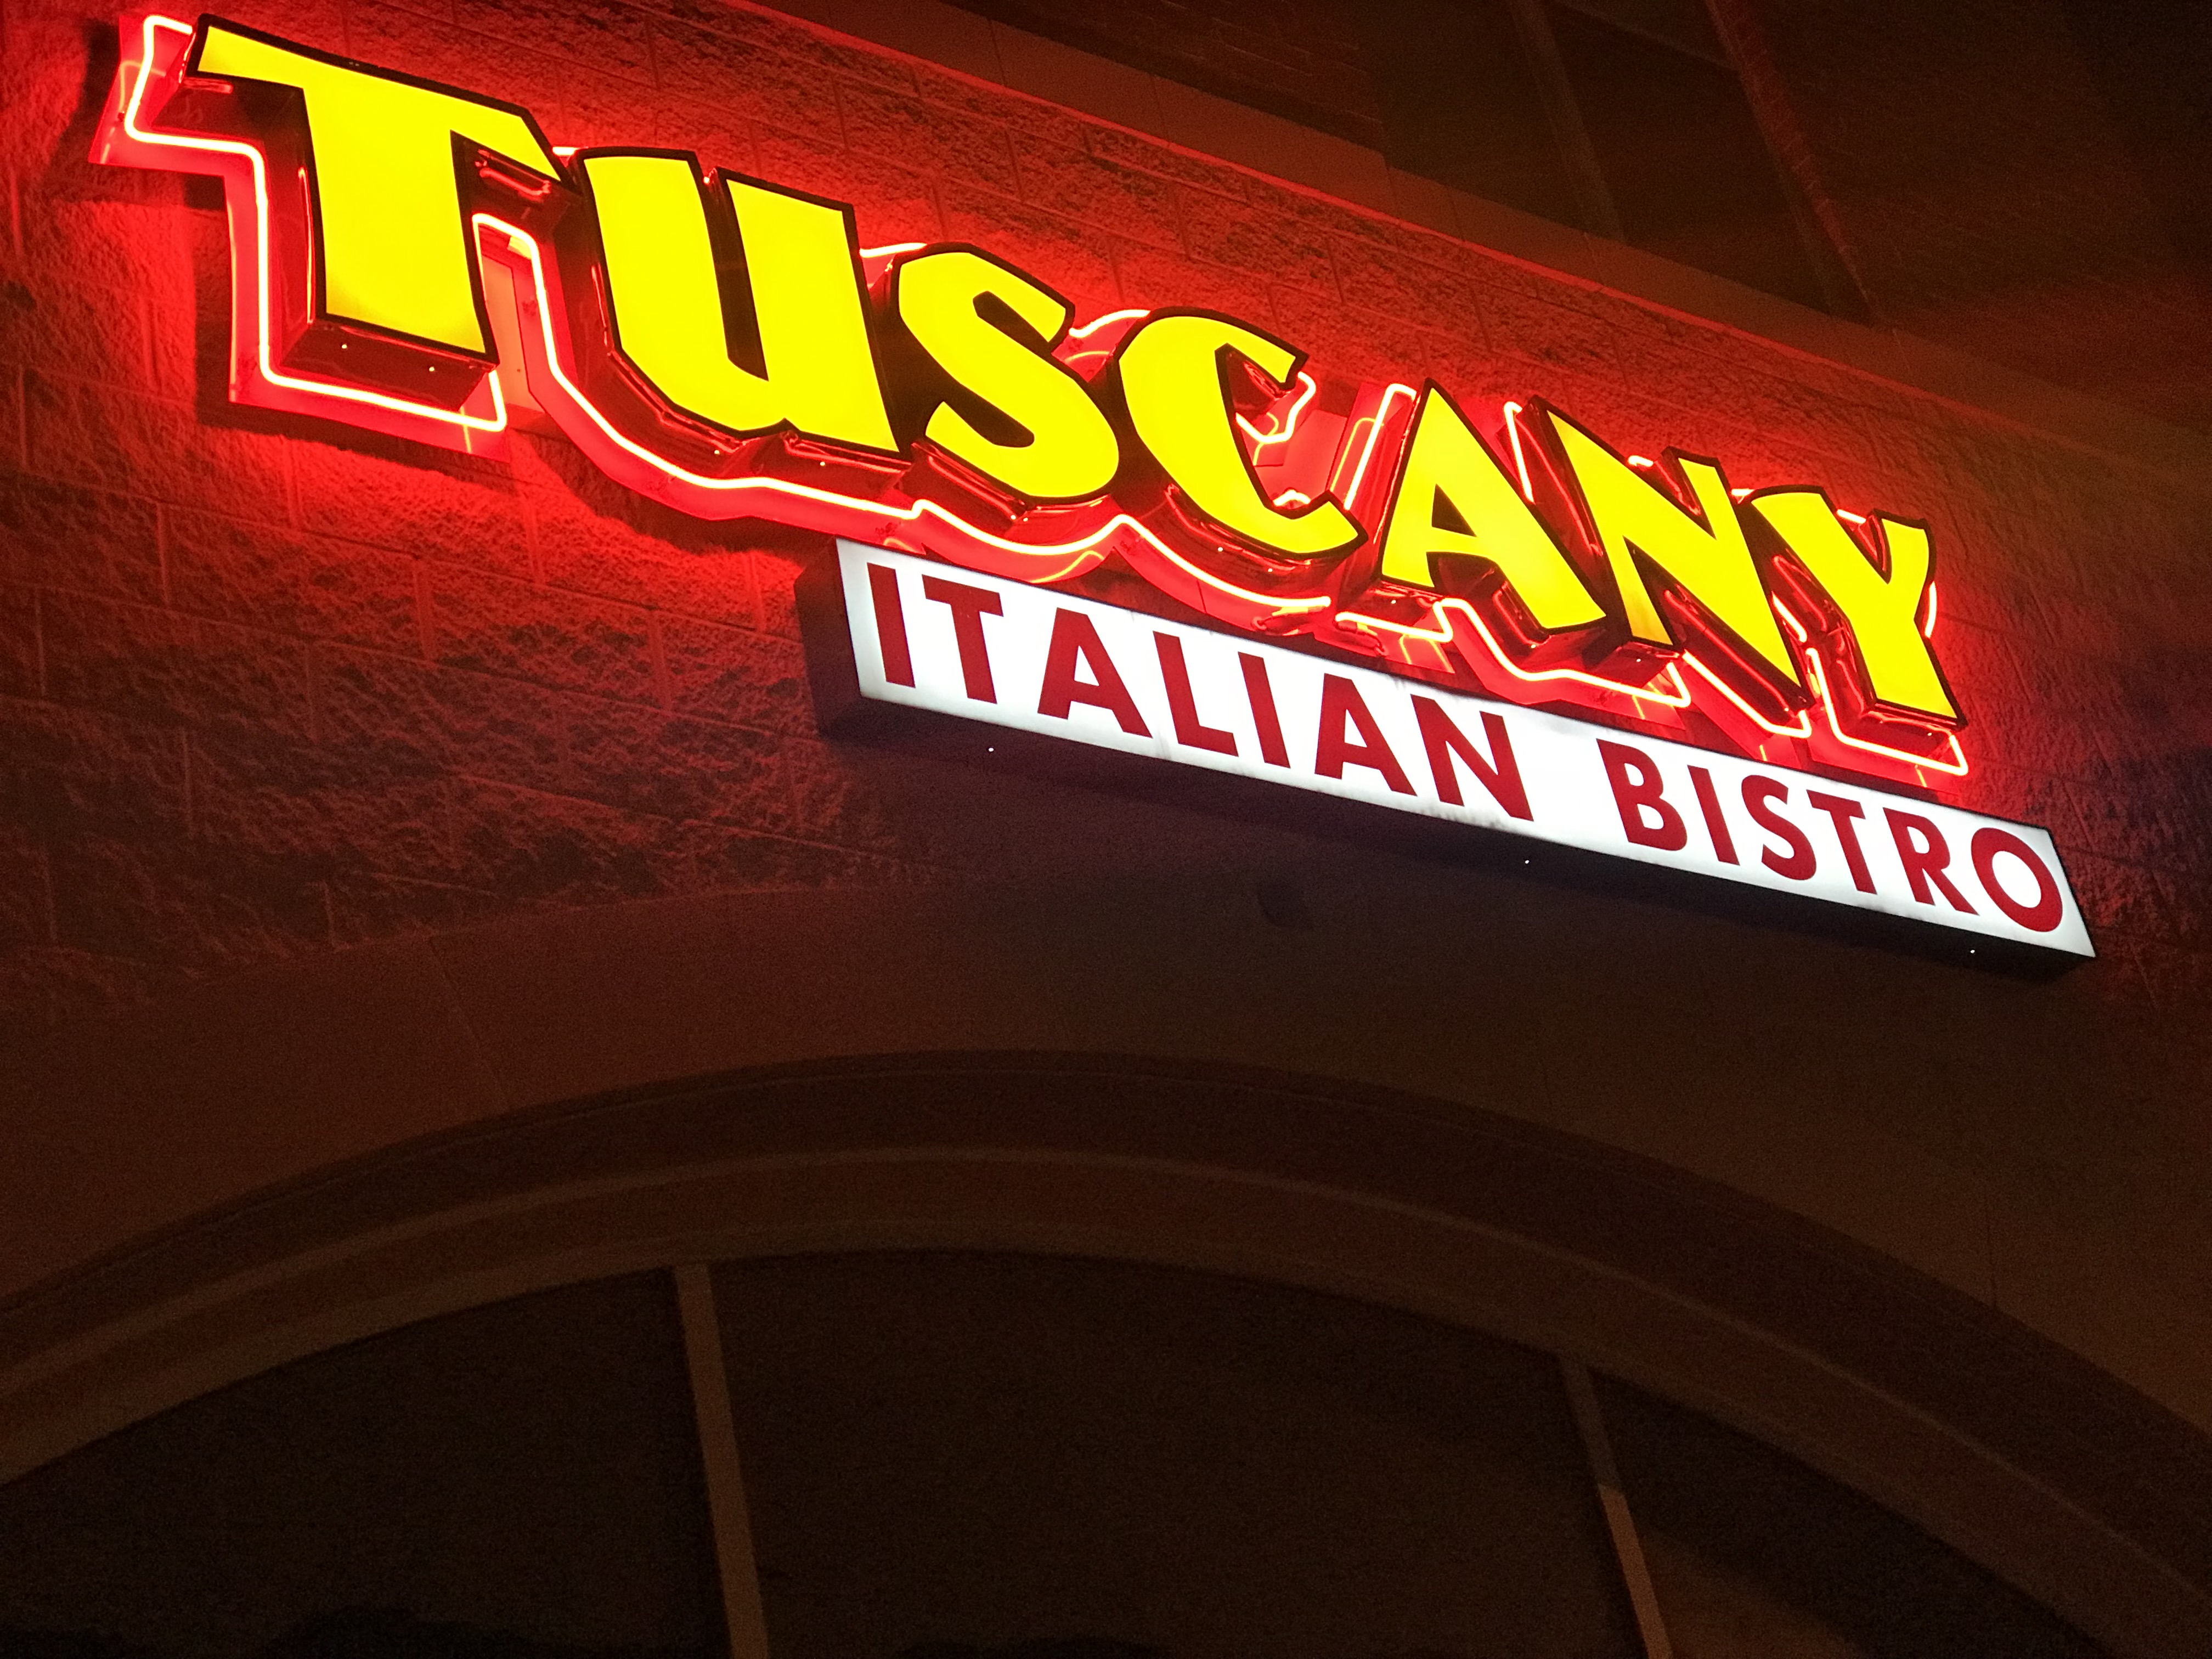 Tuscany Italian Bistro - Pizza